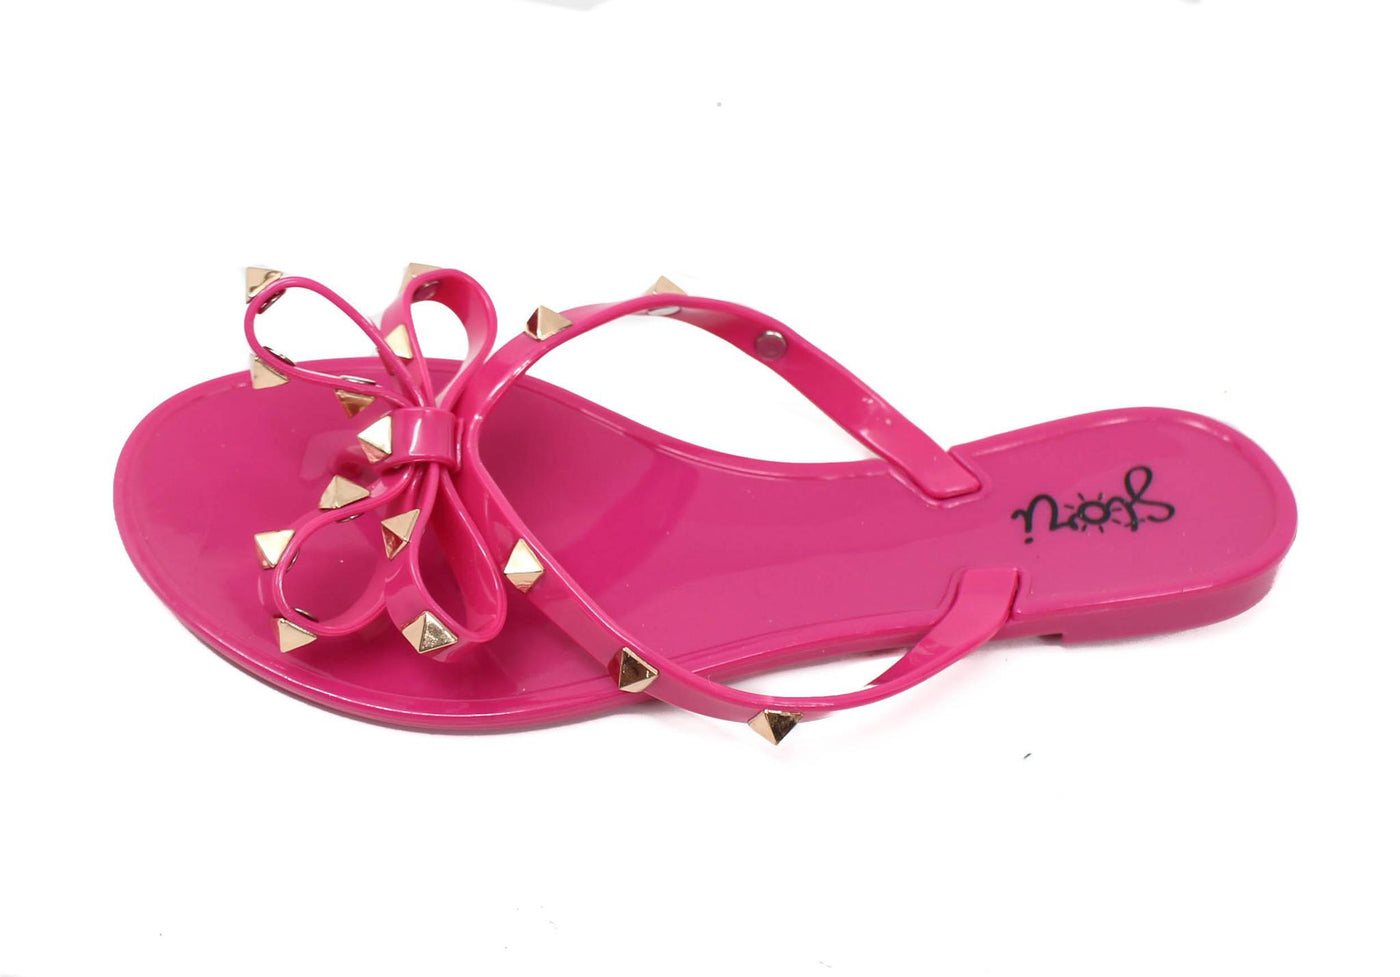 Torrid Sandals 7 W WIde Hot Pink Jelly Flats Medallion T-Strap Flip Flops  Shoes